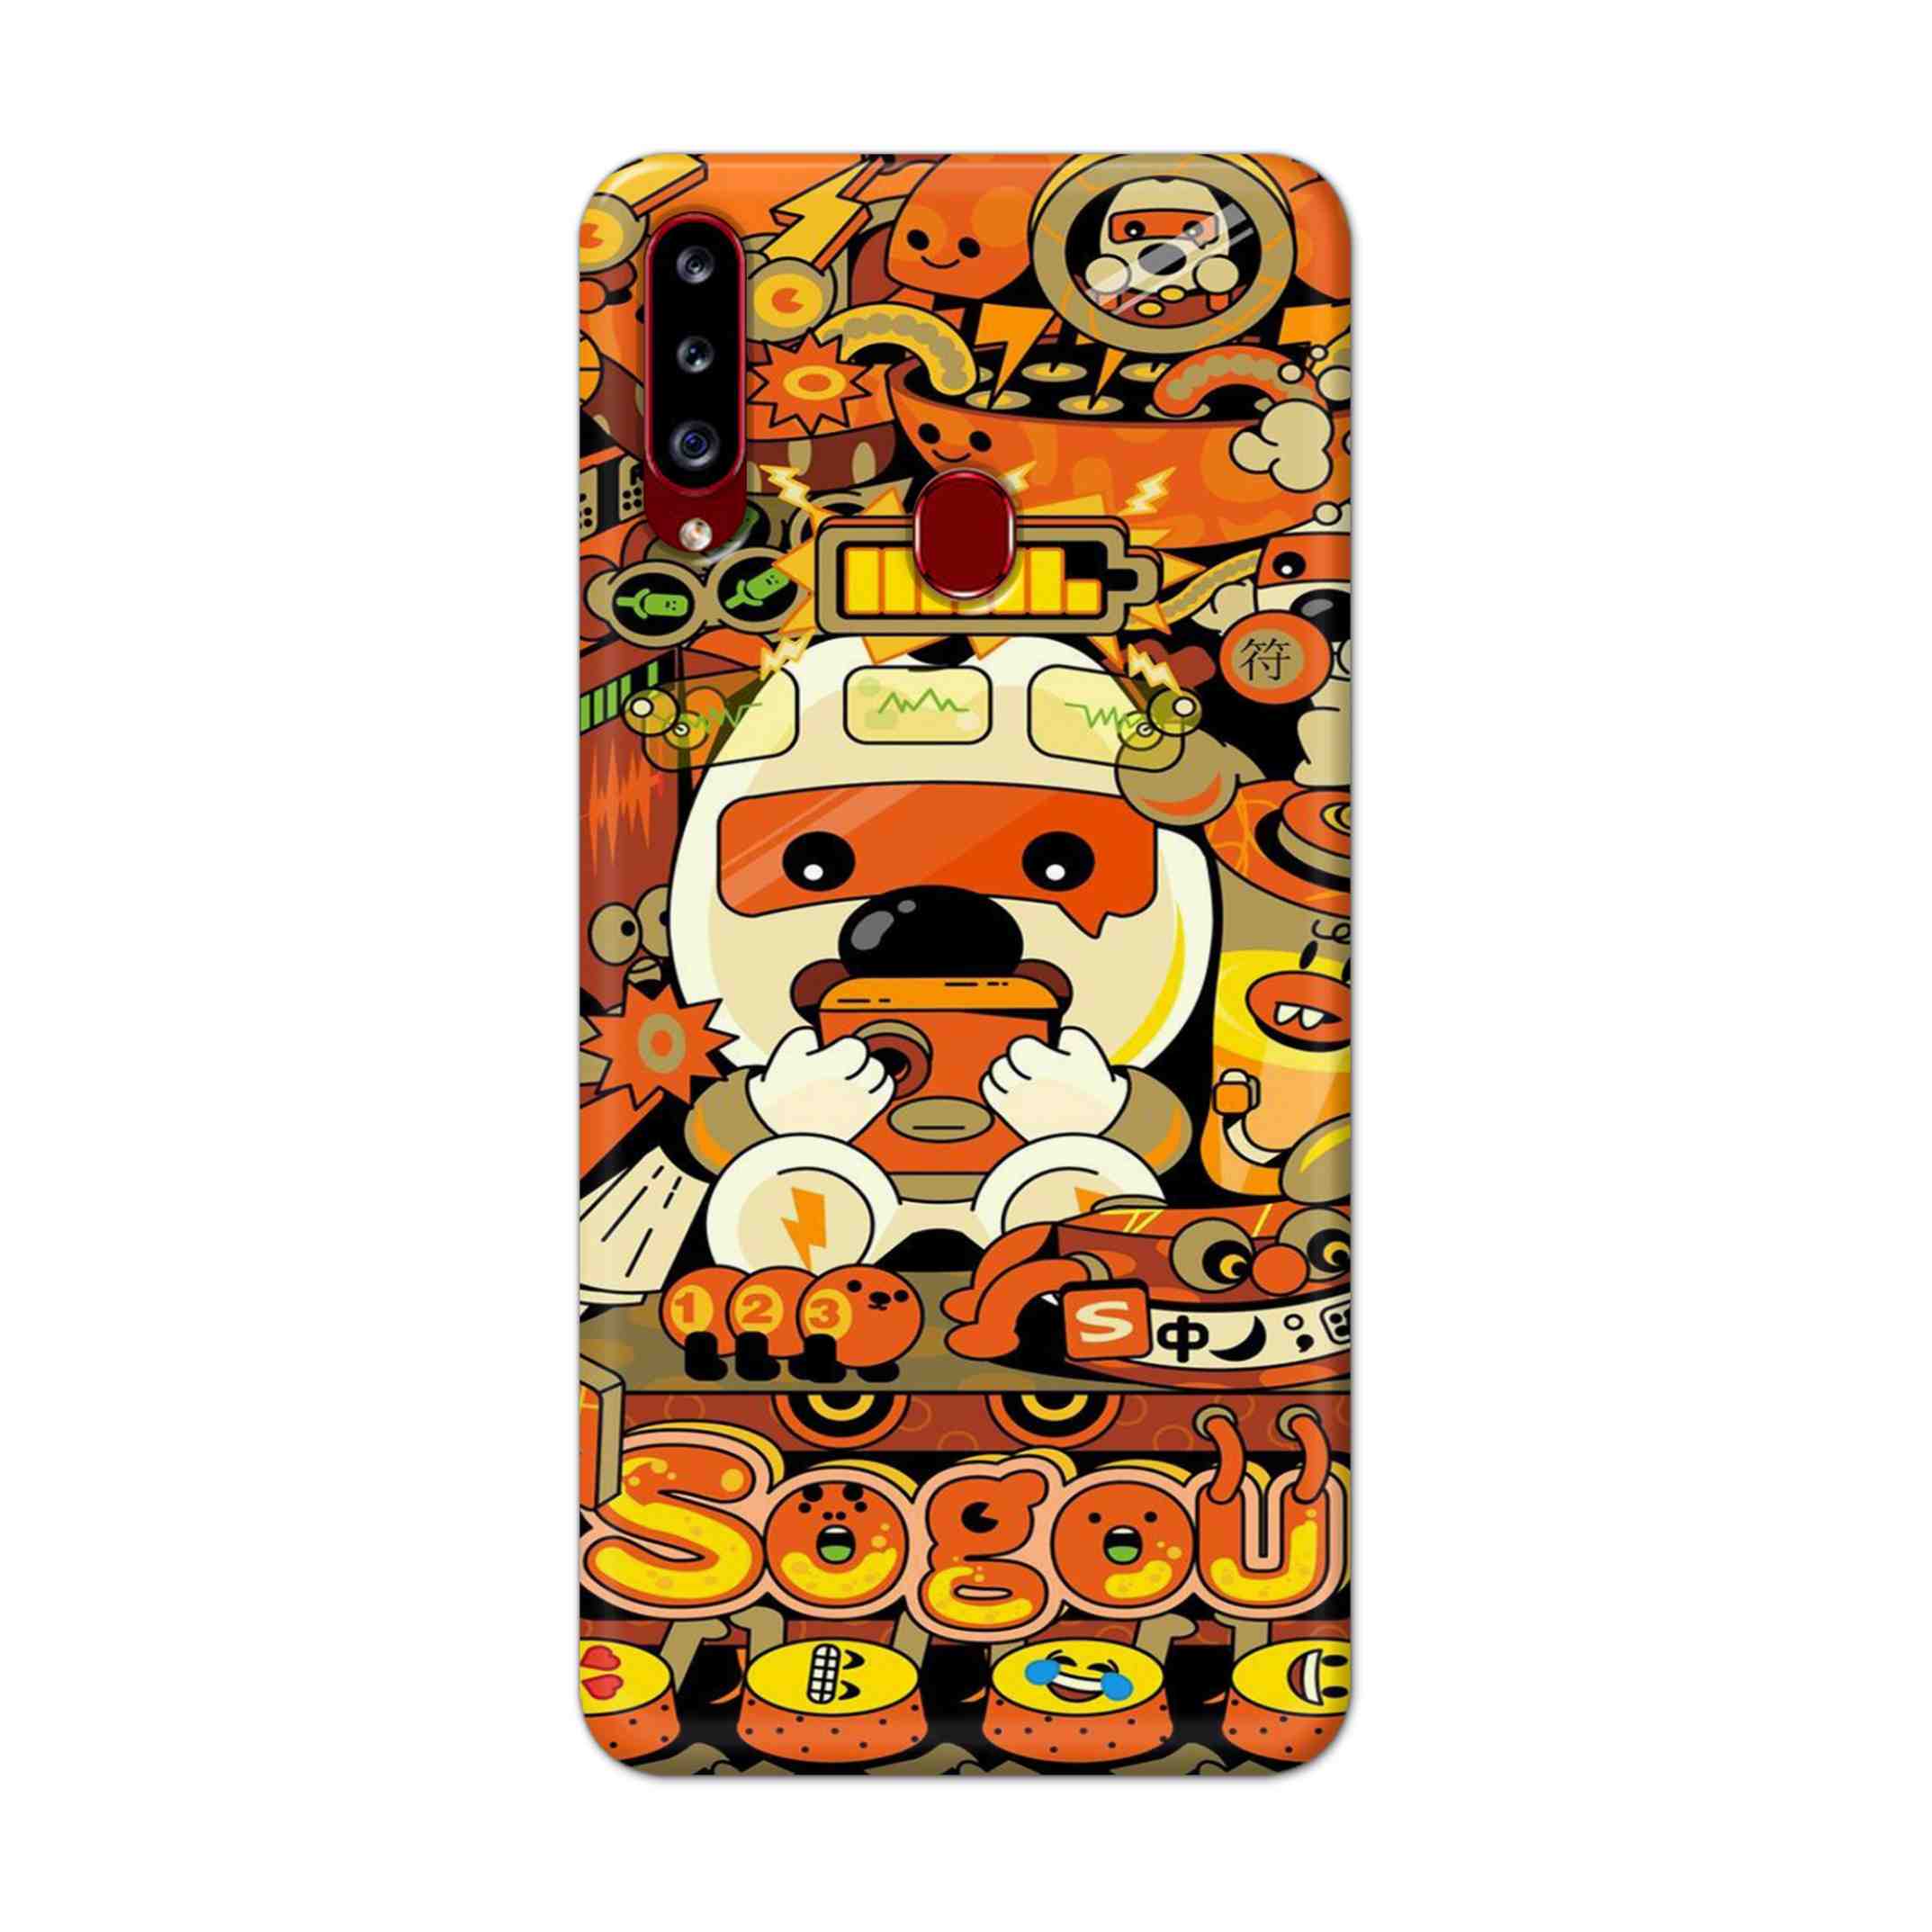 Buy Sogou Hard Back Mobile Phone Case Cover For Samsung A20s Online